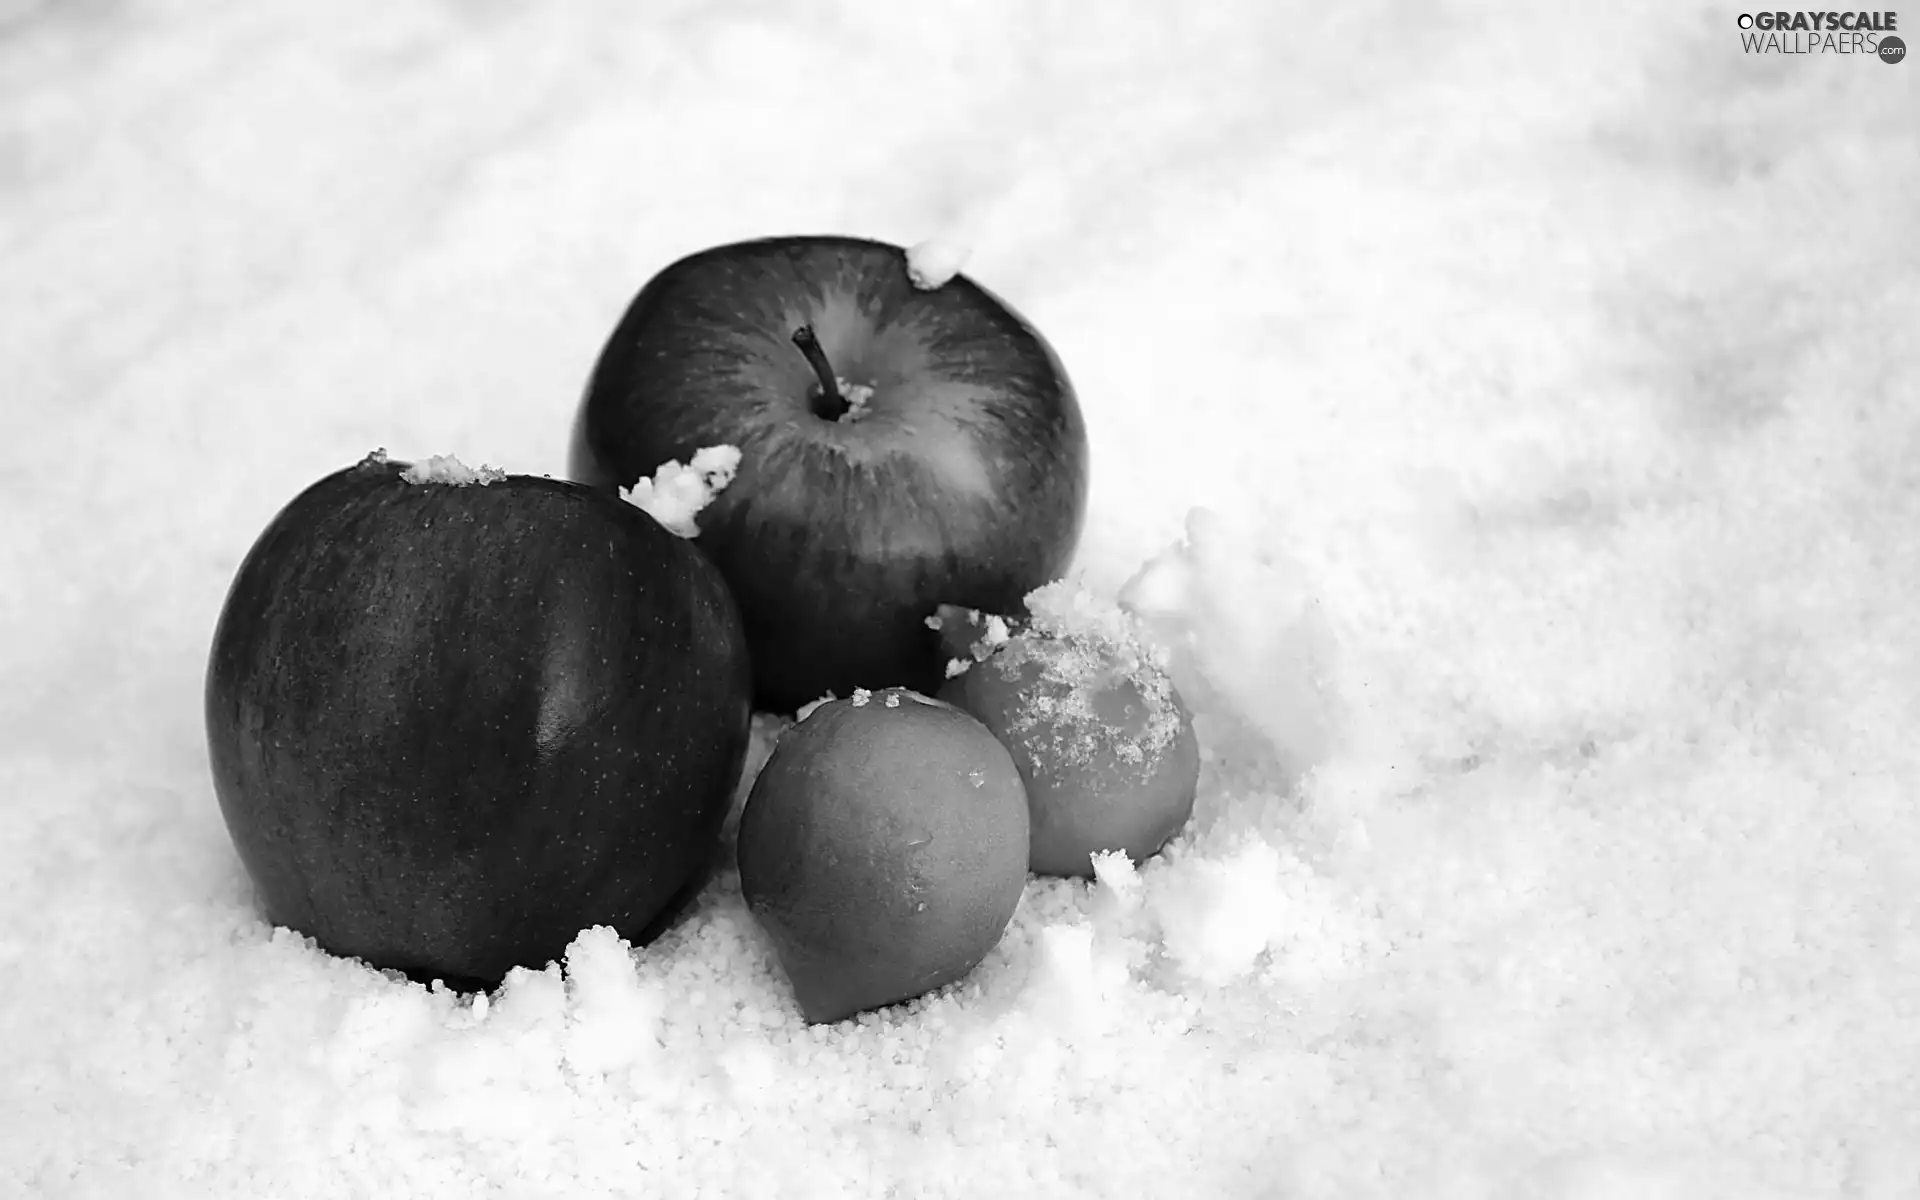 snow, apples, Amaranth